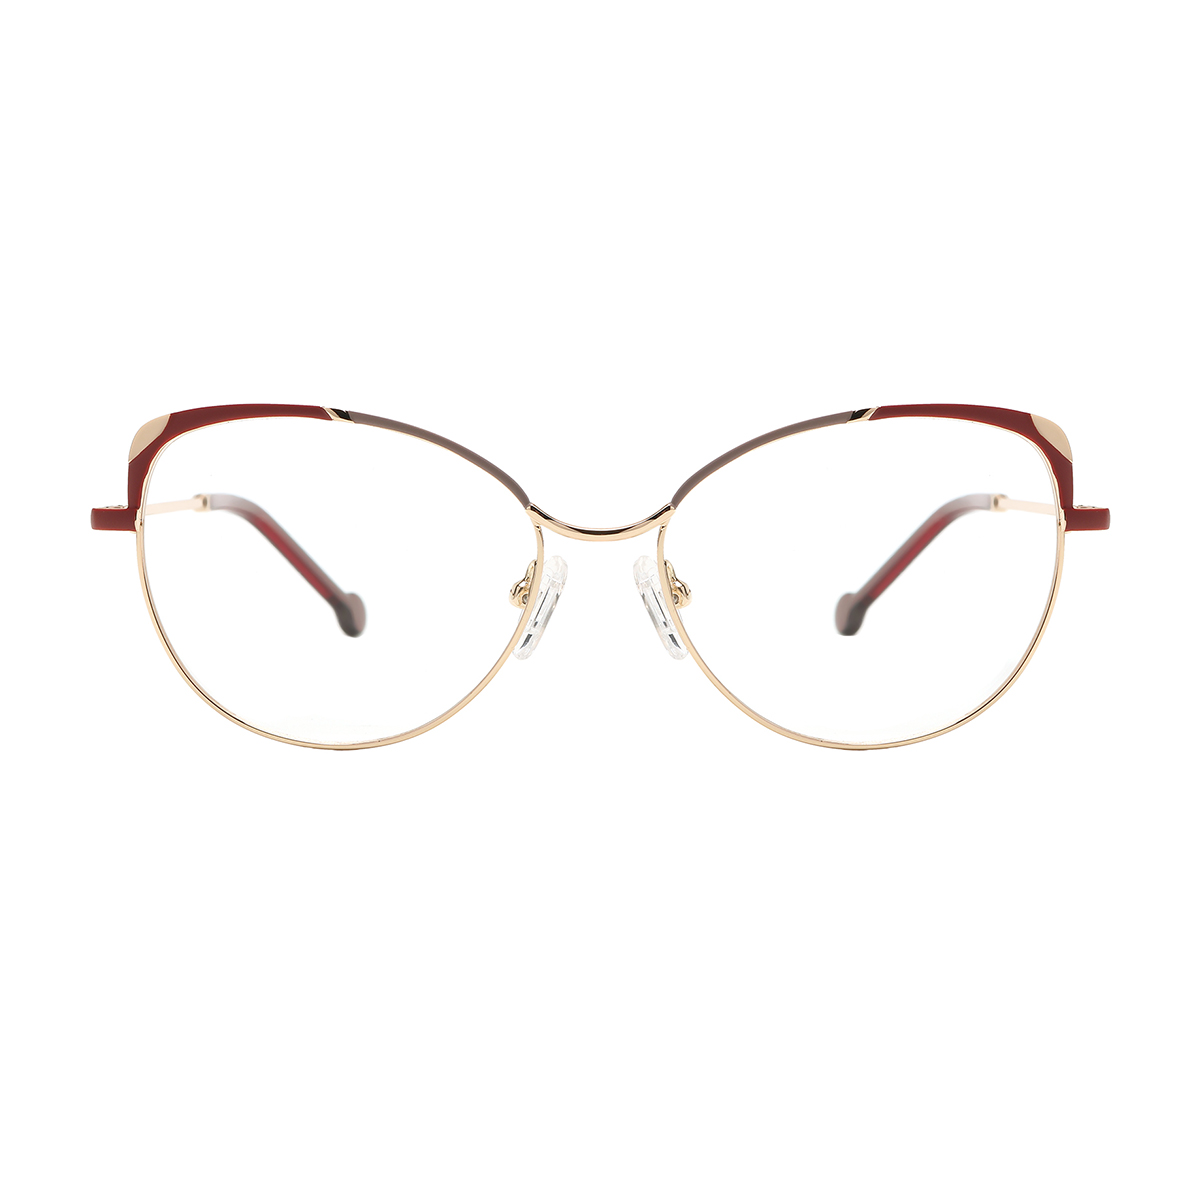 oval gold eyeglasses